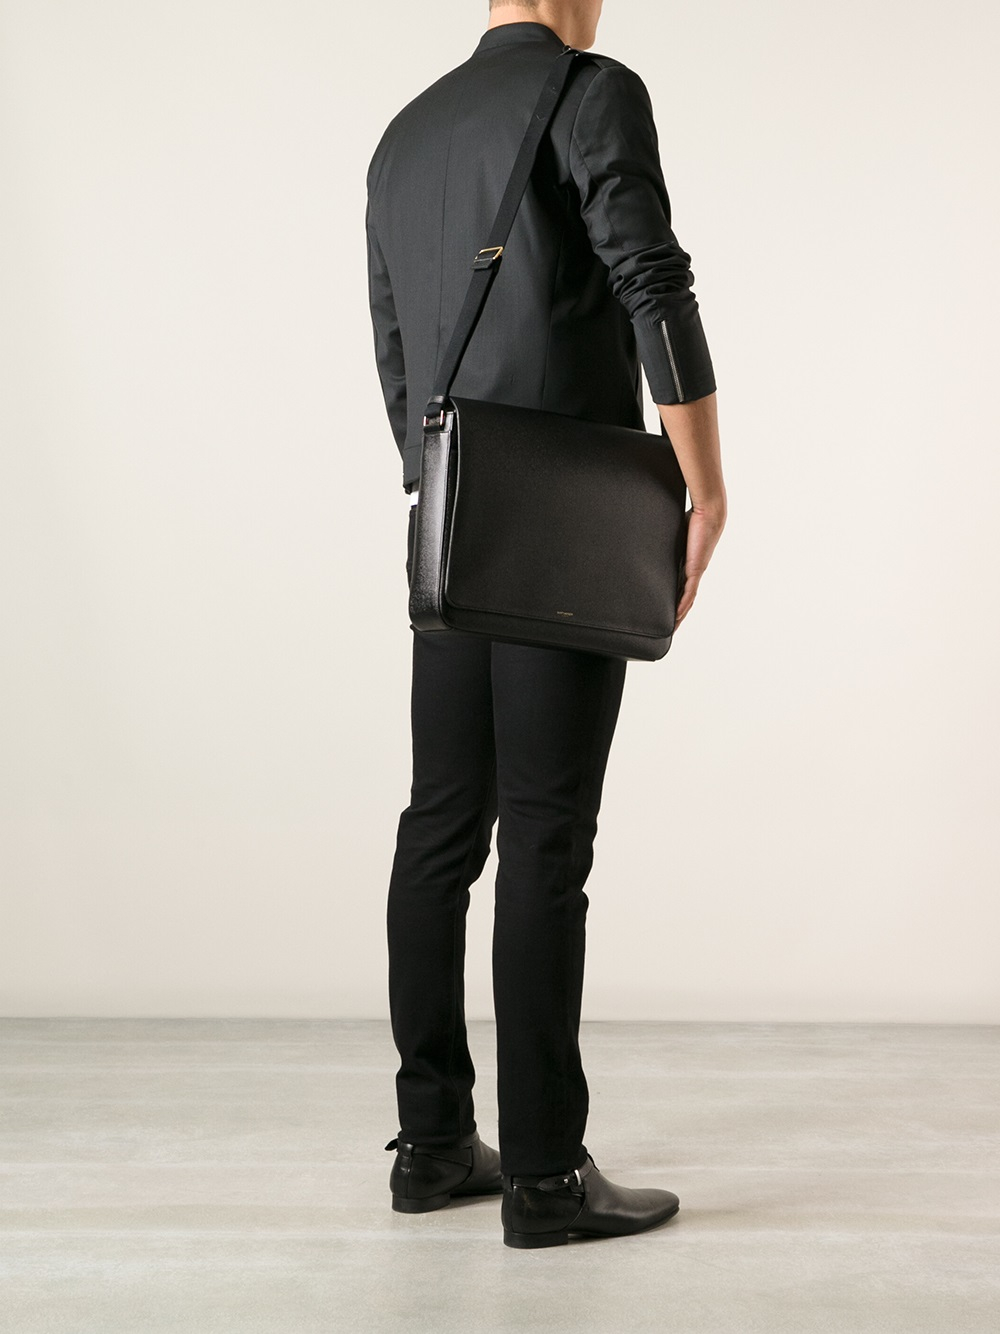 Lyst - Saint Laurent Messenger Bag in Black for Men